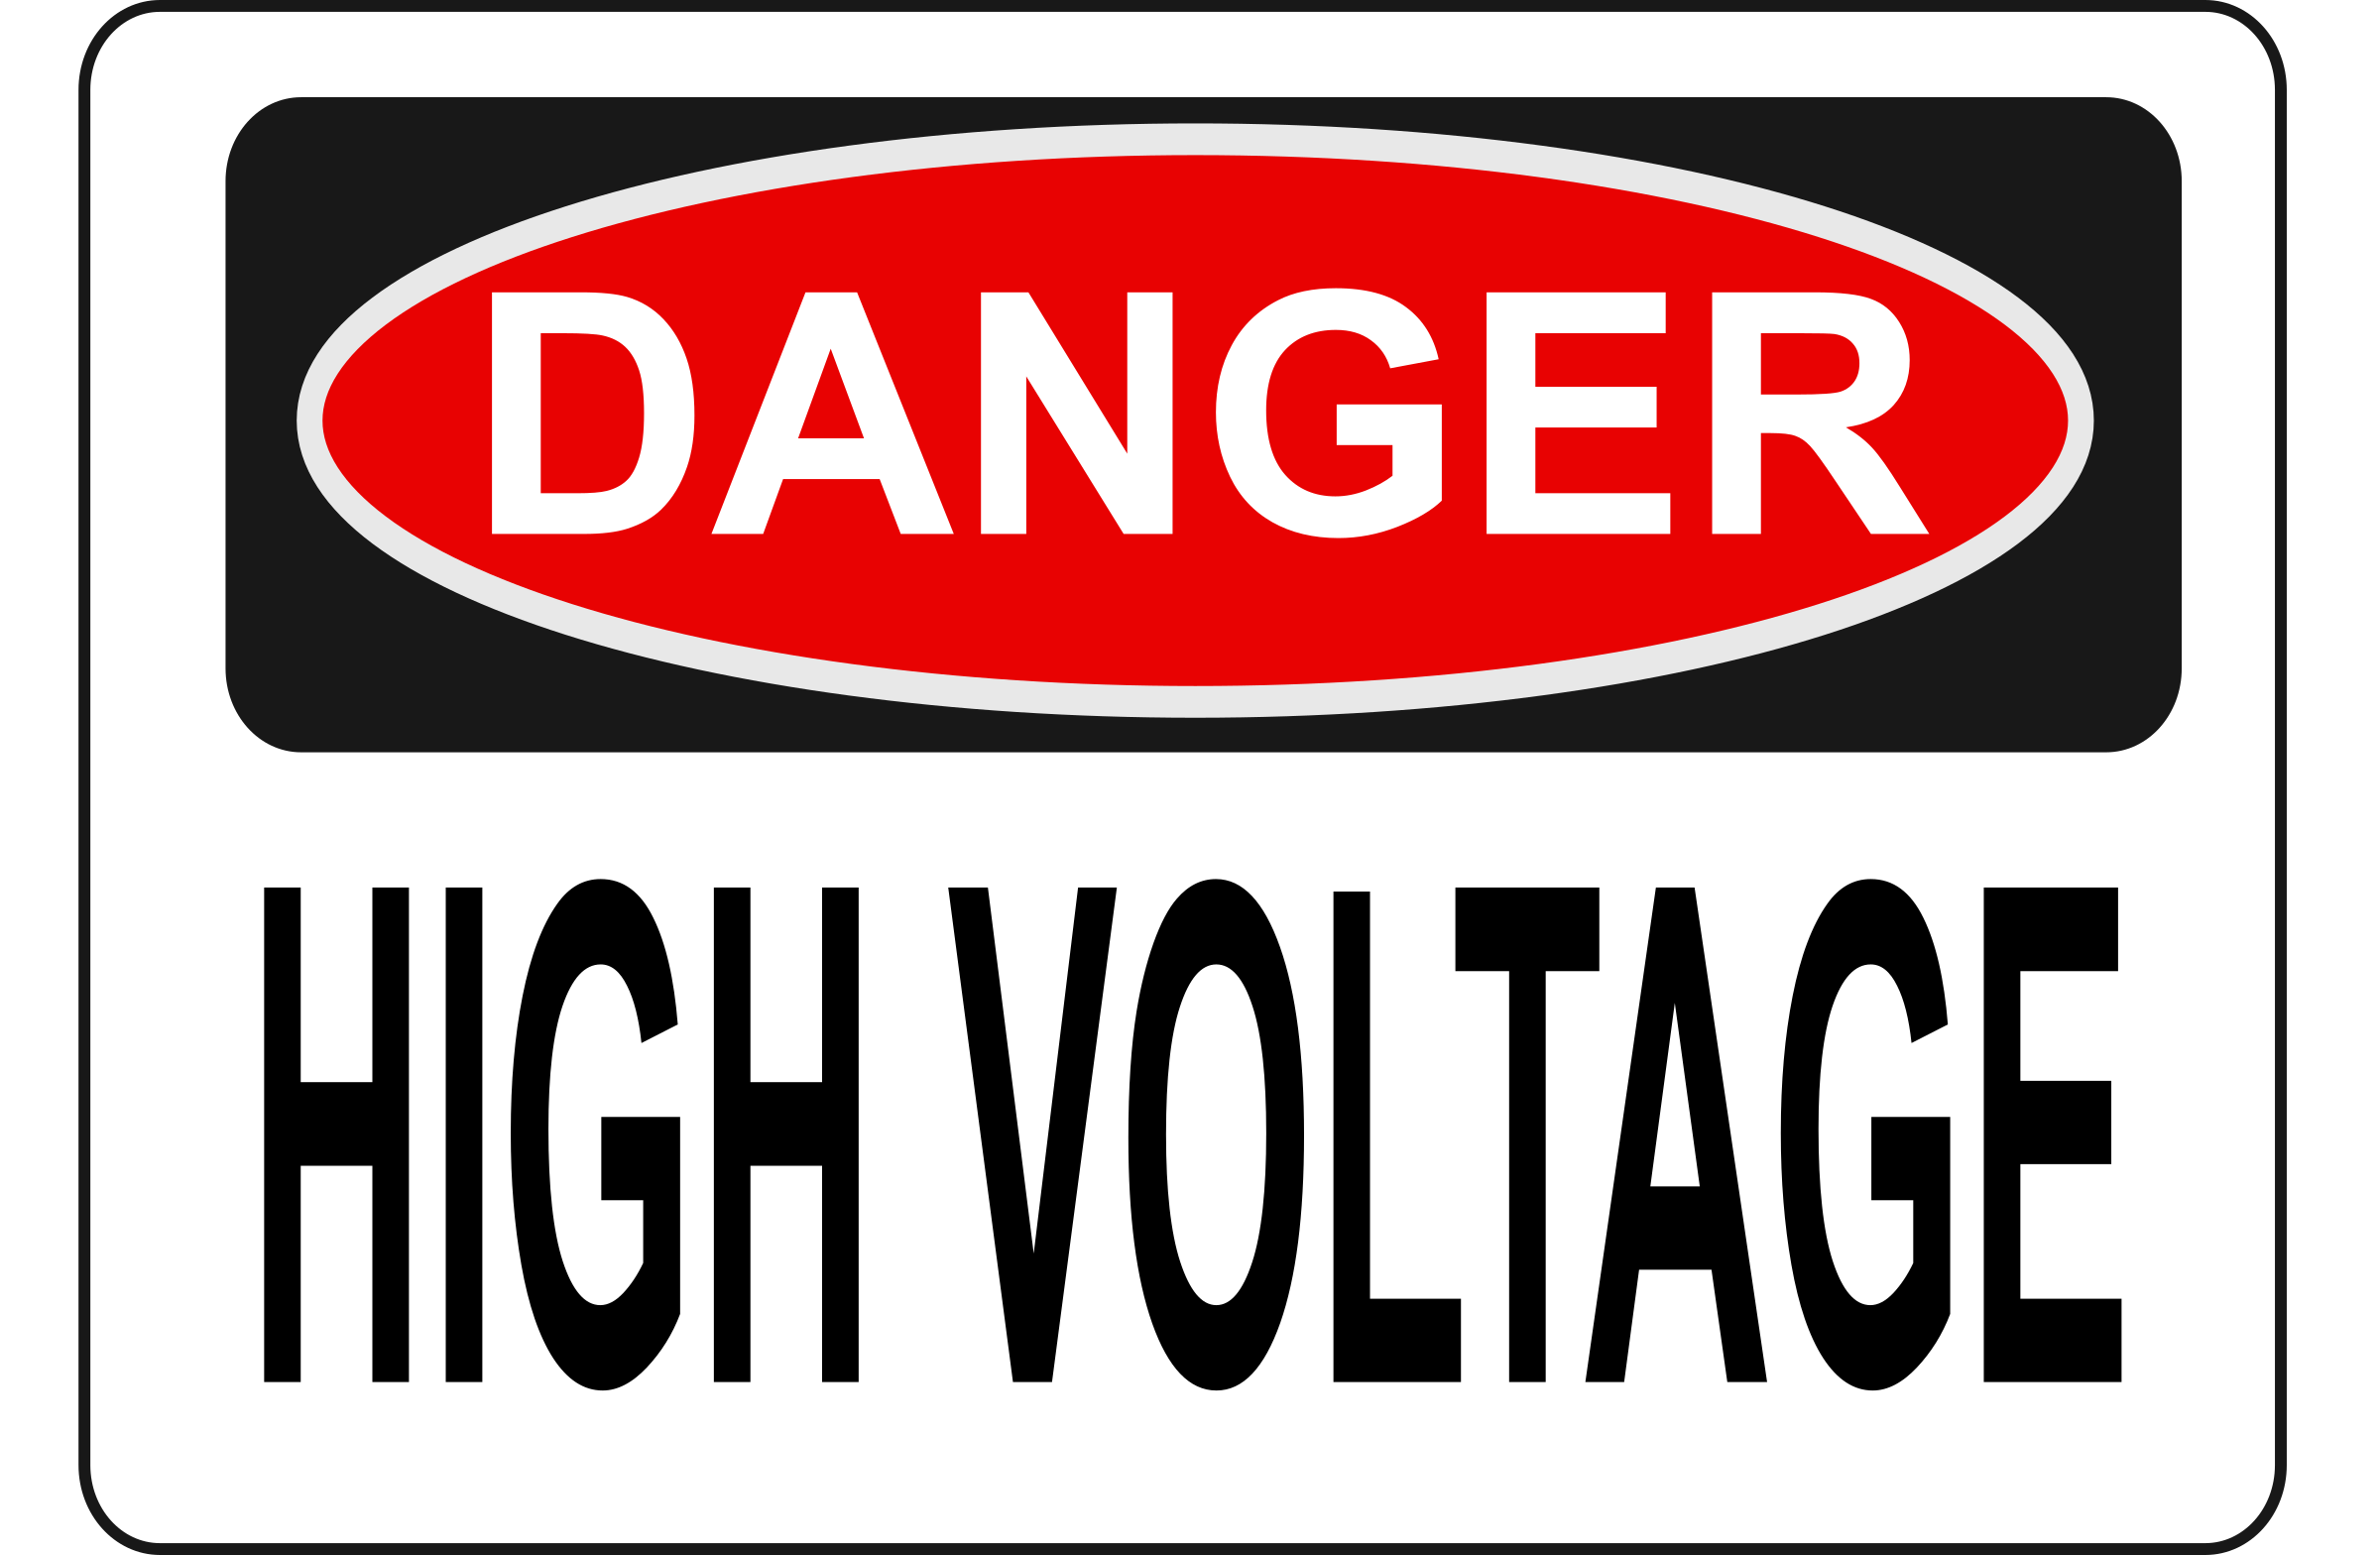 High voltage alt big. Danger clipart construction sign